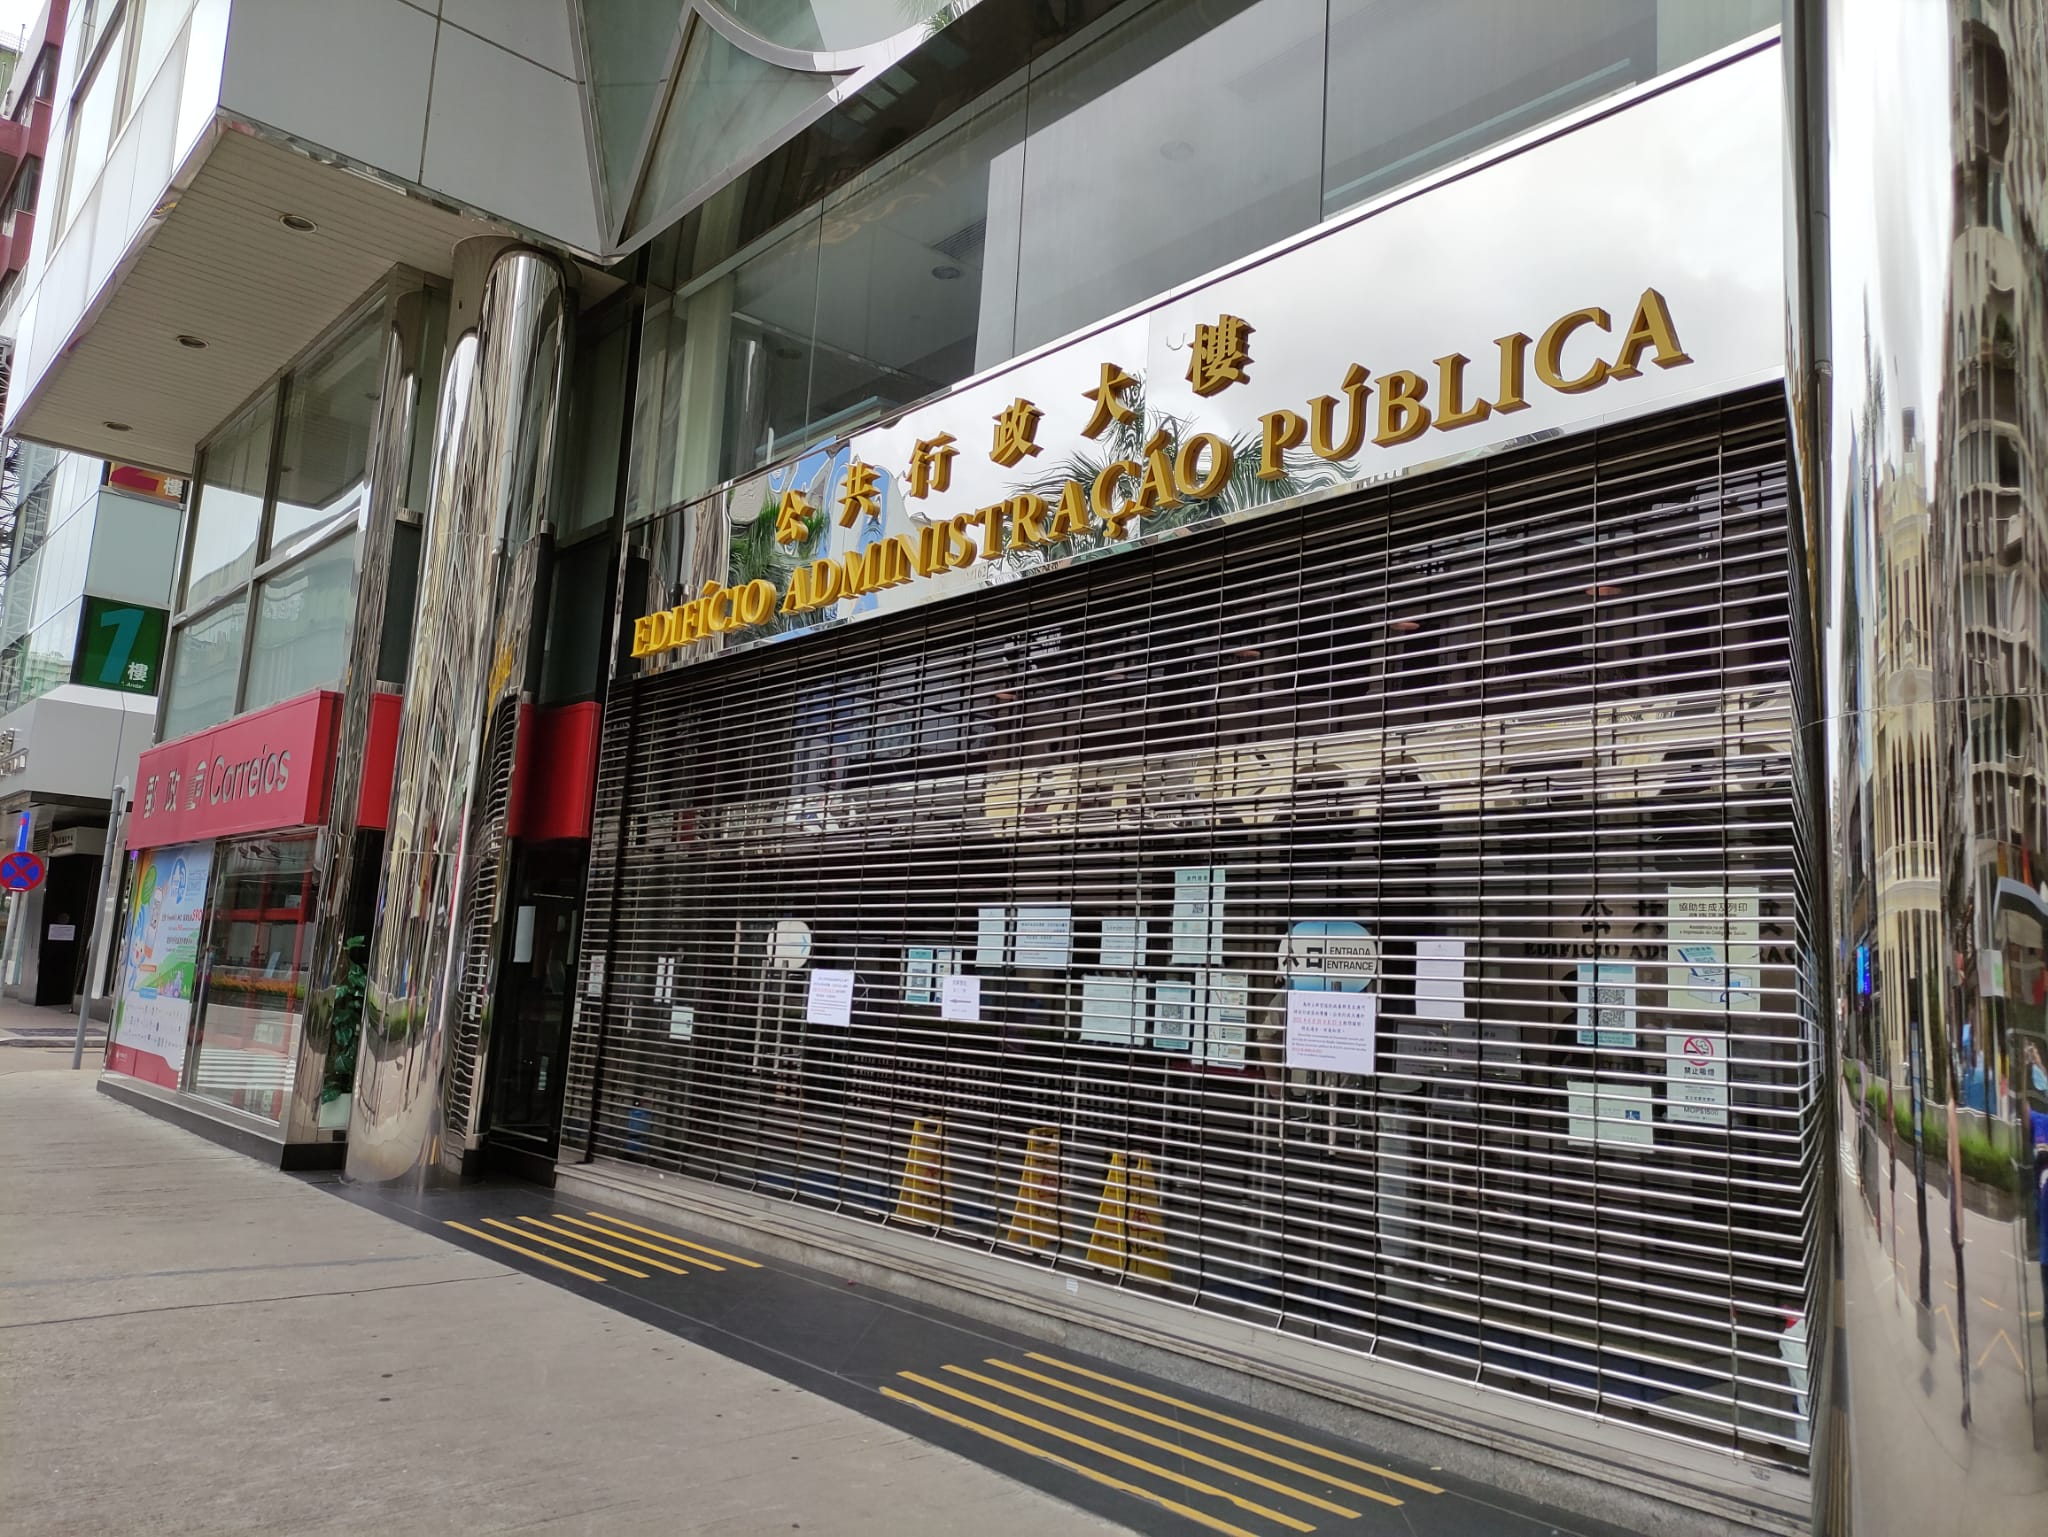 Macau public services closed on recent covid outbreak